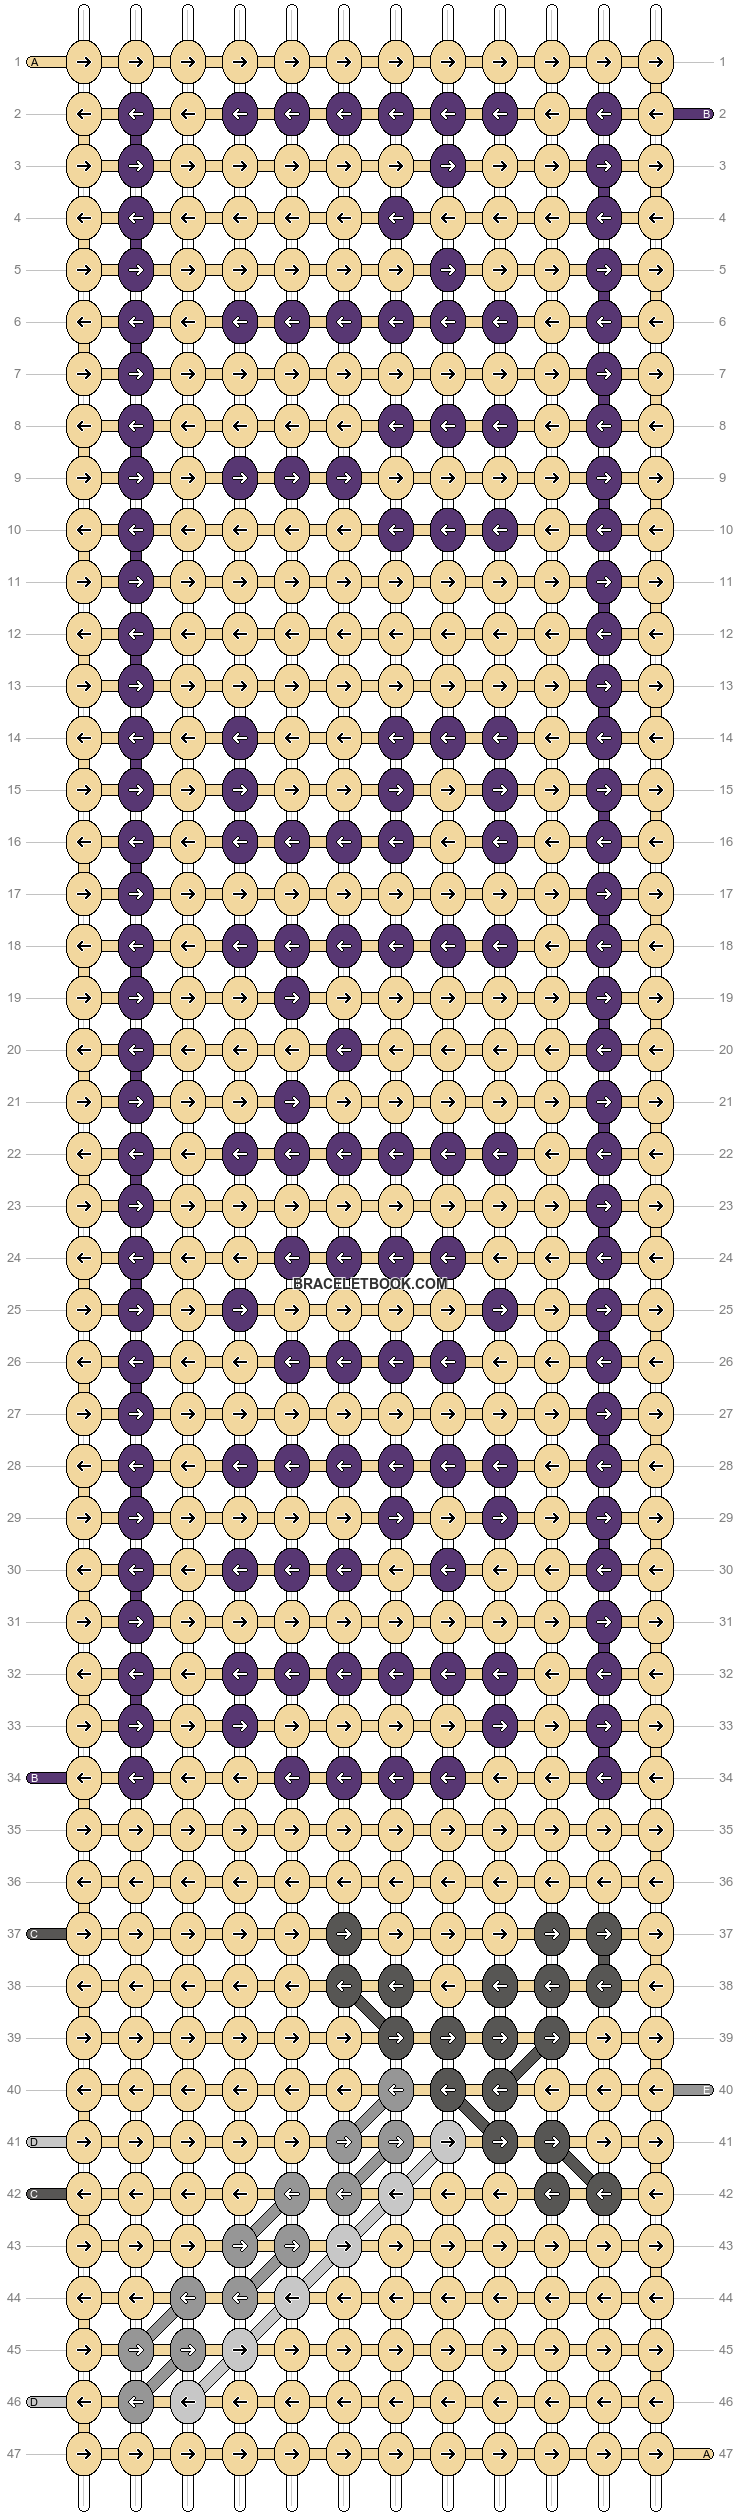 Alpha pattern #58894 pattern